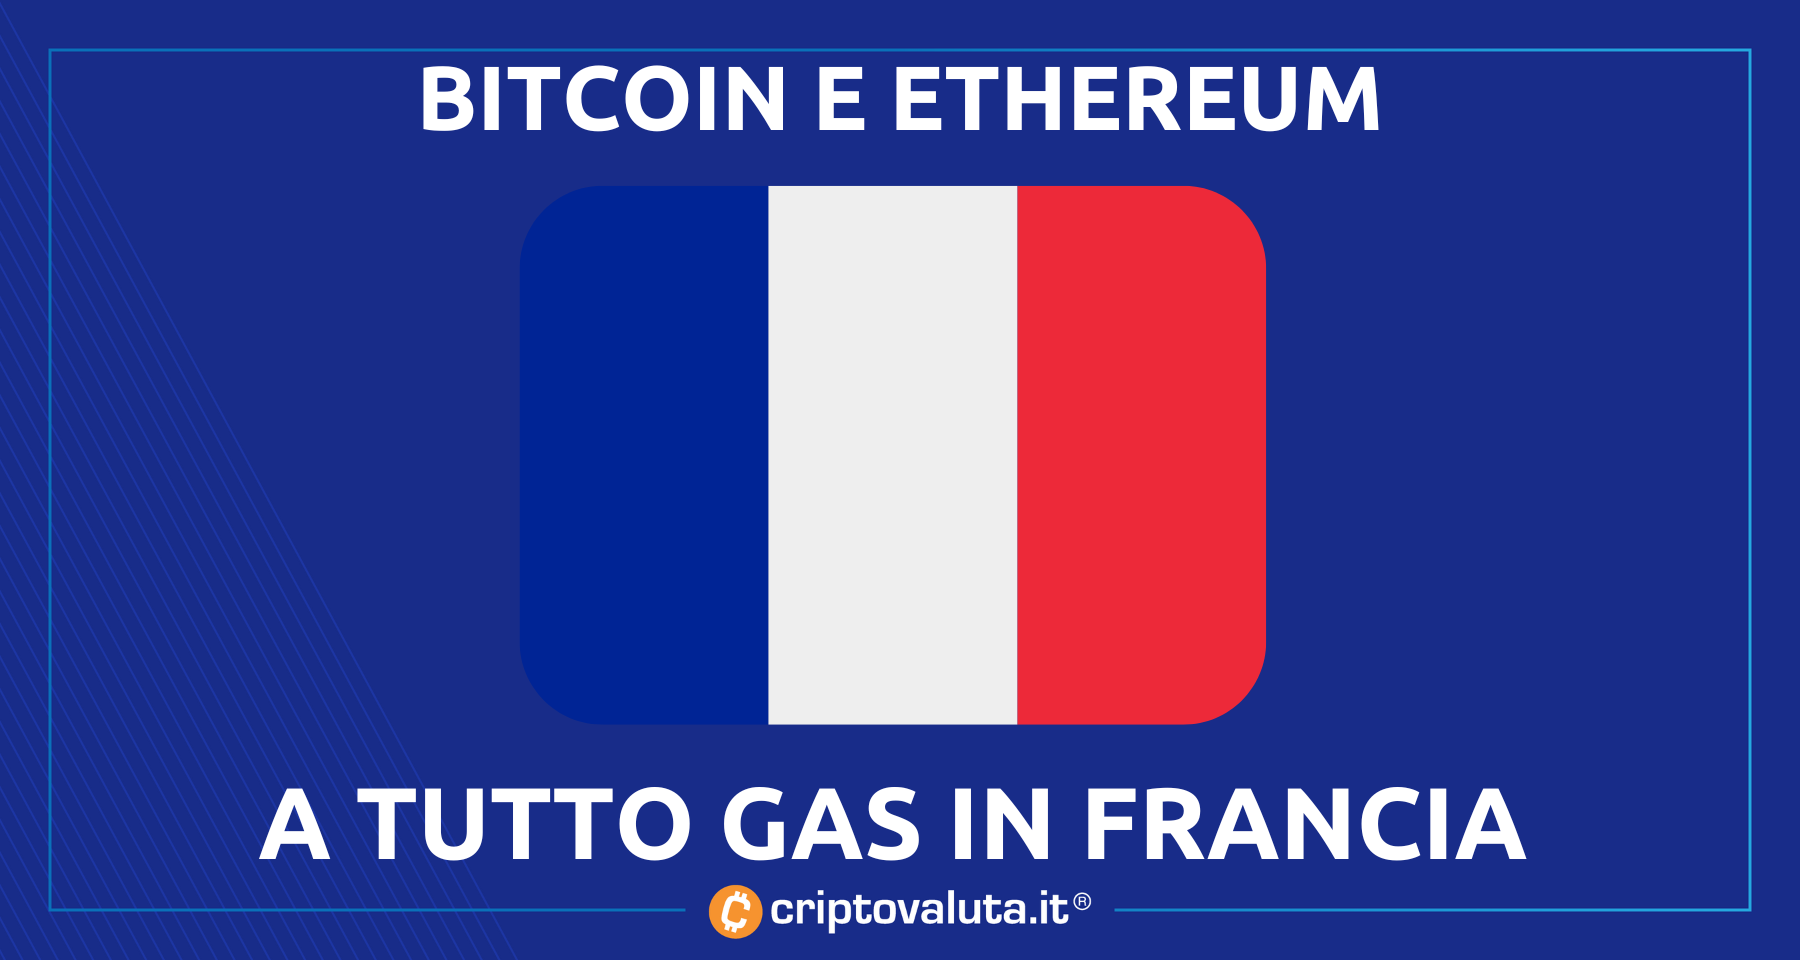 Société Générale su Bitcoin e Ethereum | Ok dalla CONSOB francese